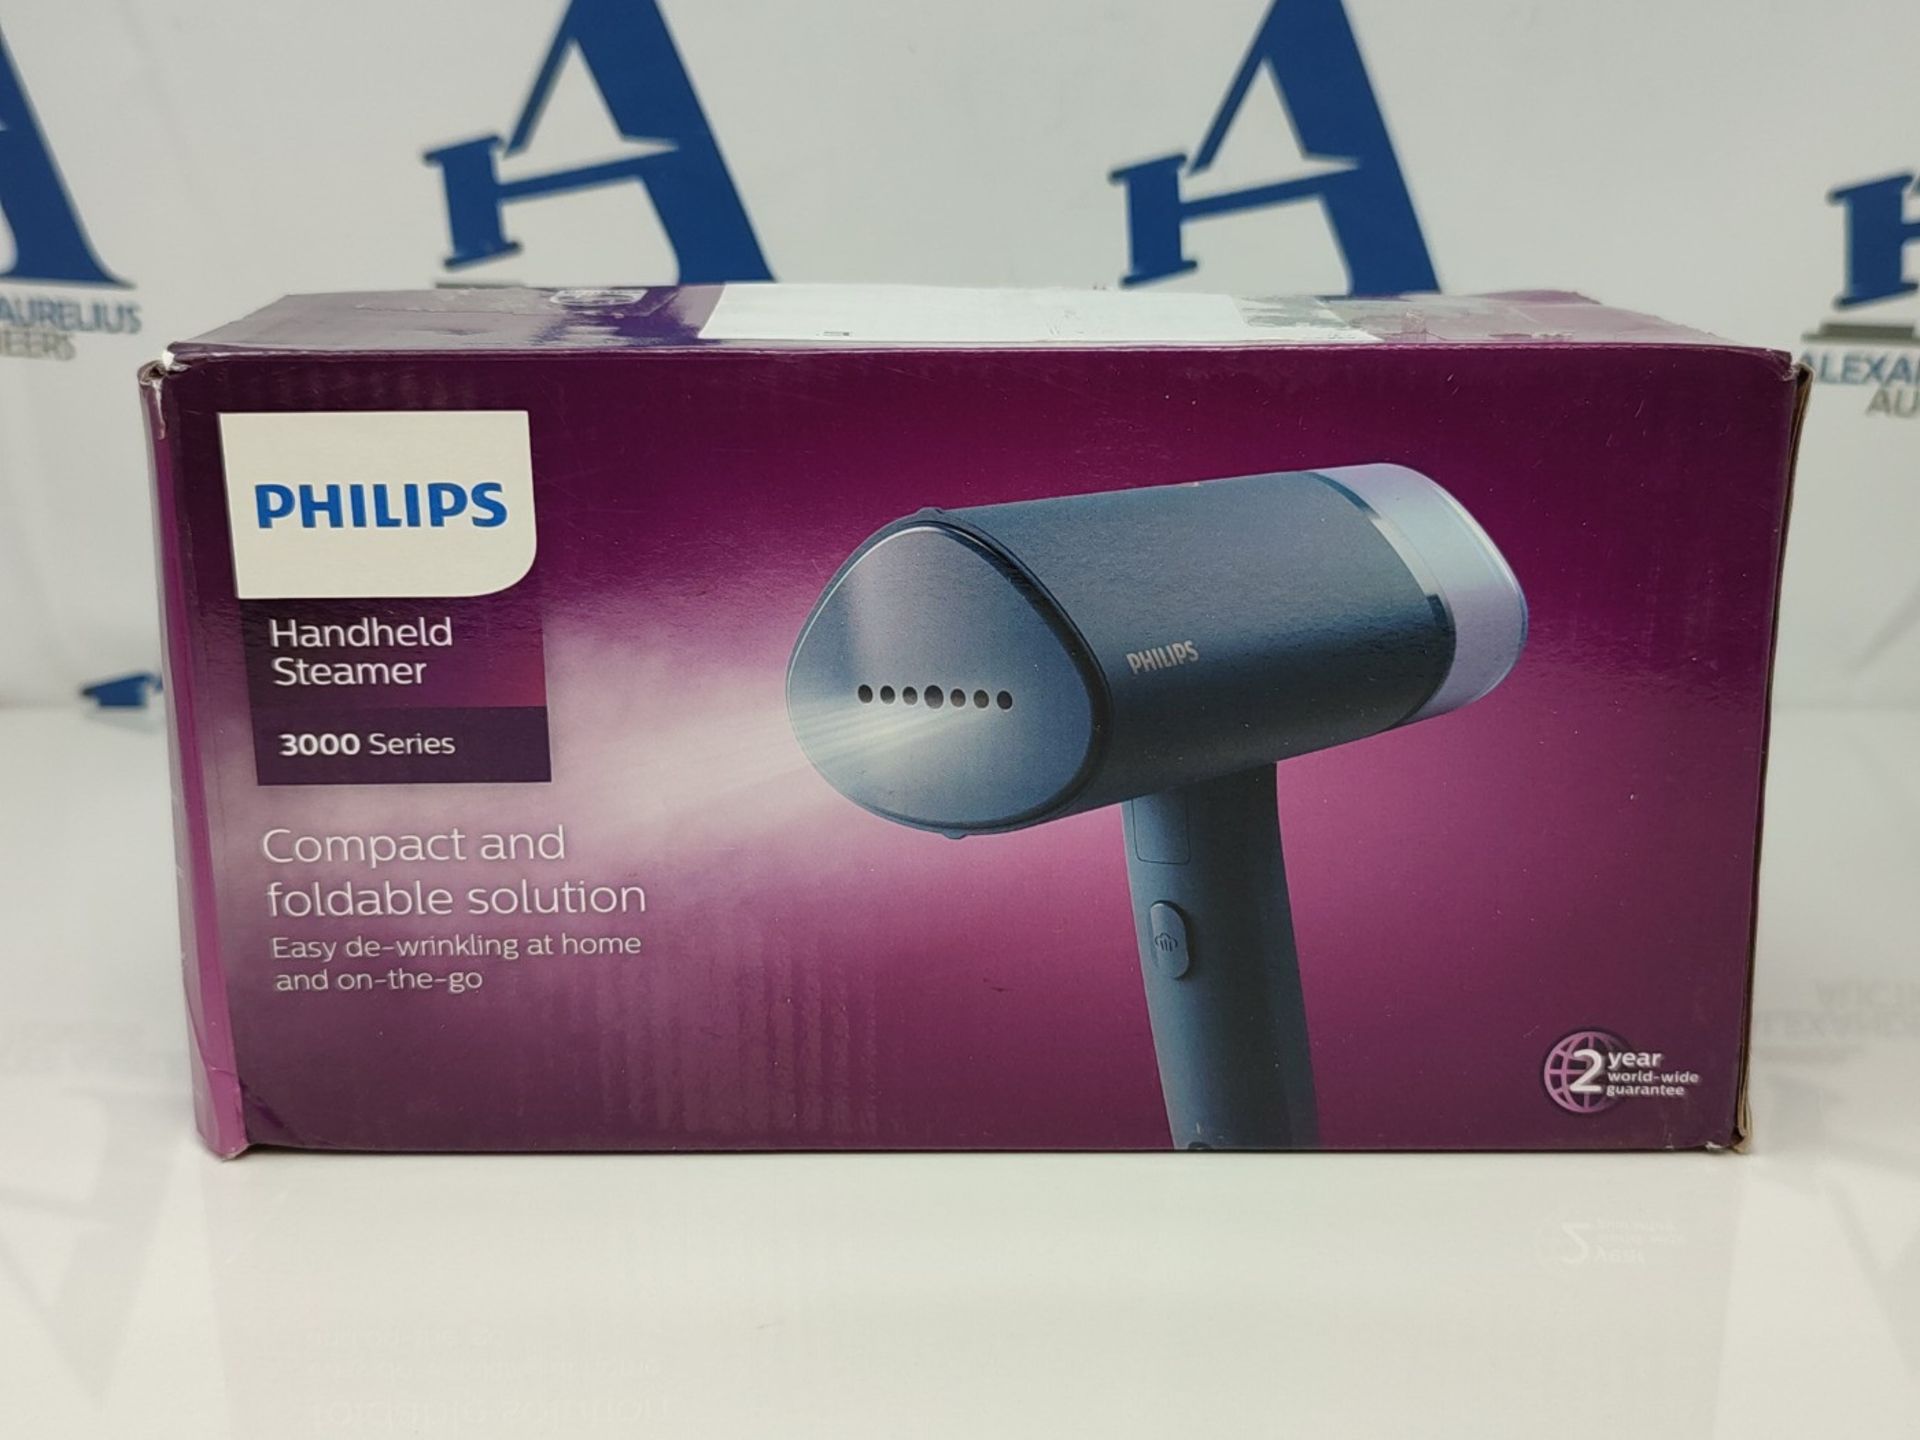 Philips 3000 Series Handheld Steamer, 1000W, 20 g/min Steam, Kills Germs, Detachable 1